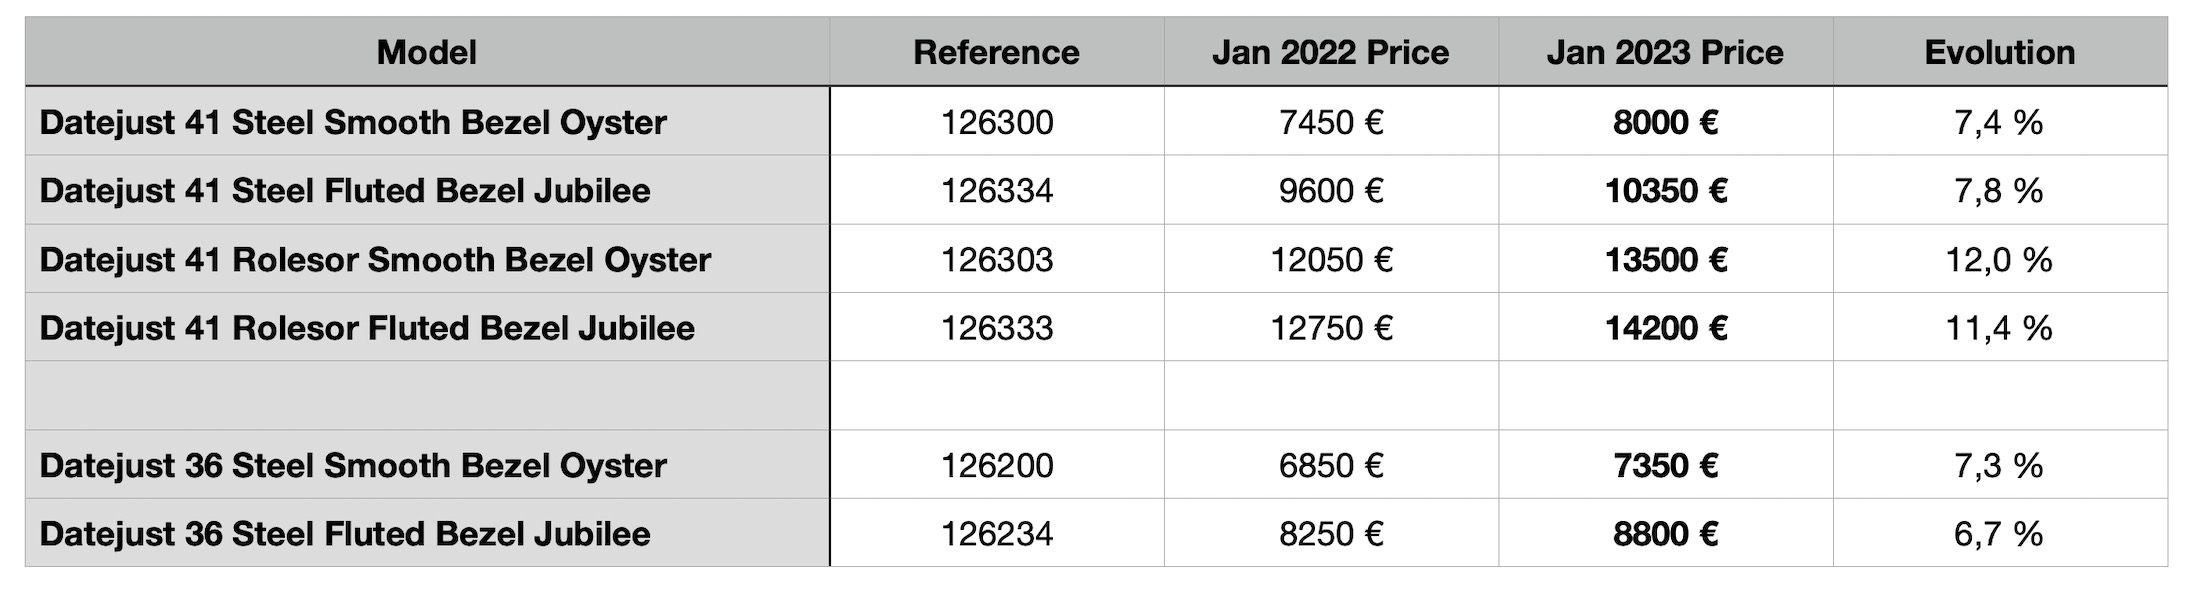 2023 Rolex Price List - Increase Compared 2022 - Rolex Datejust